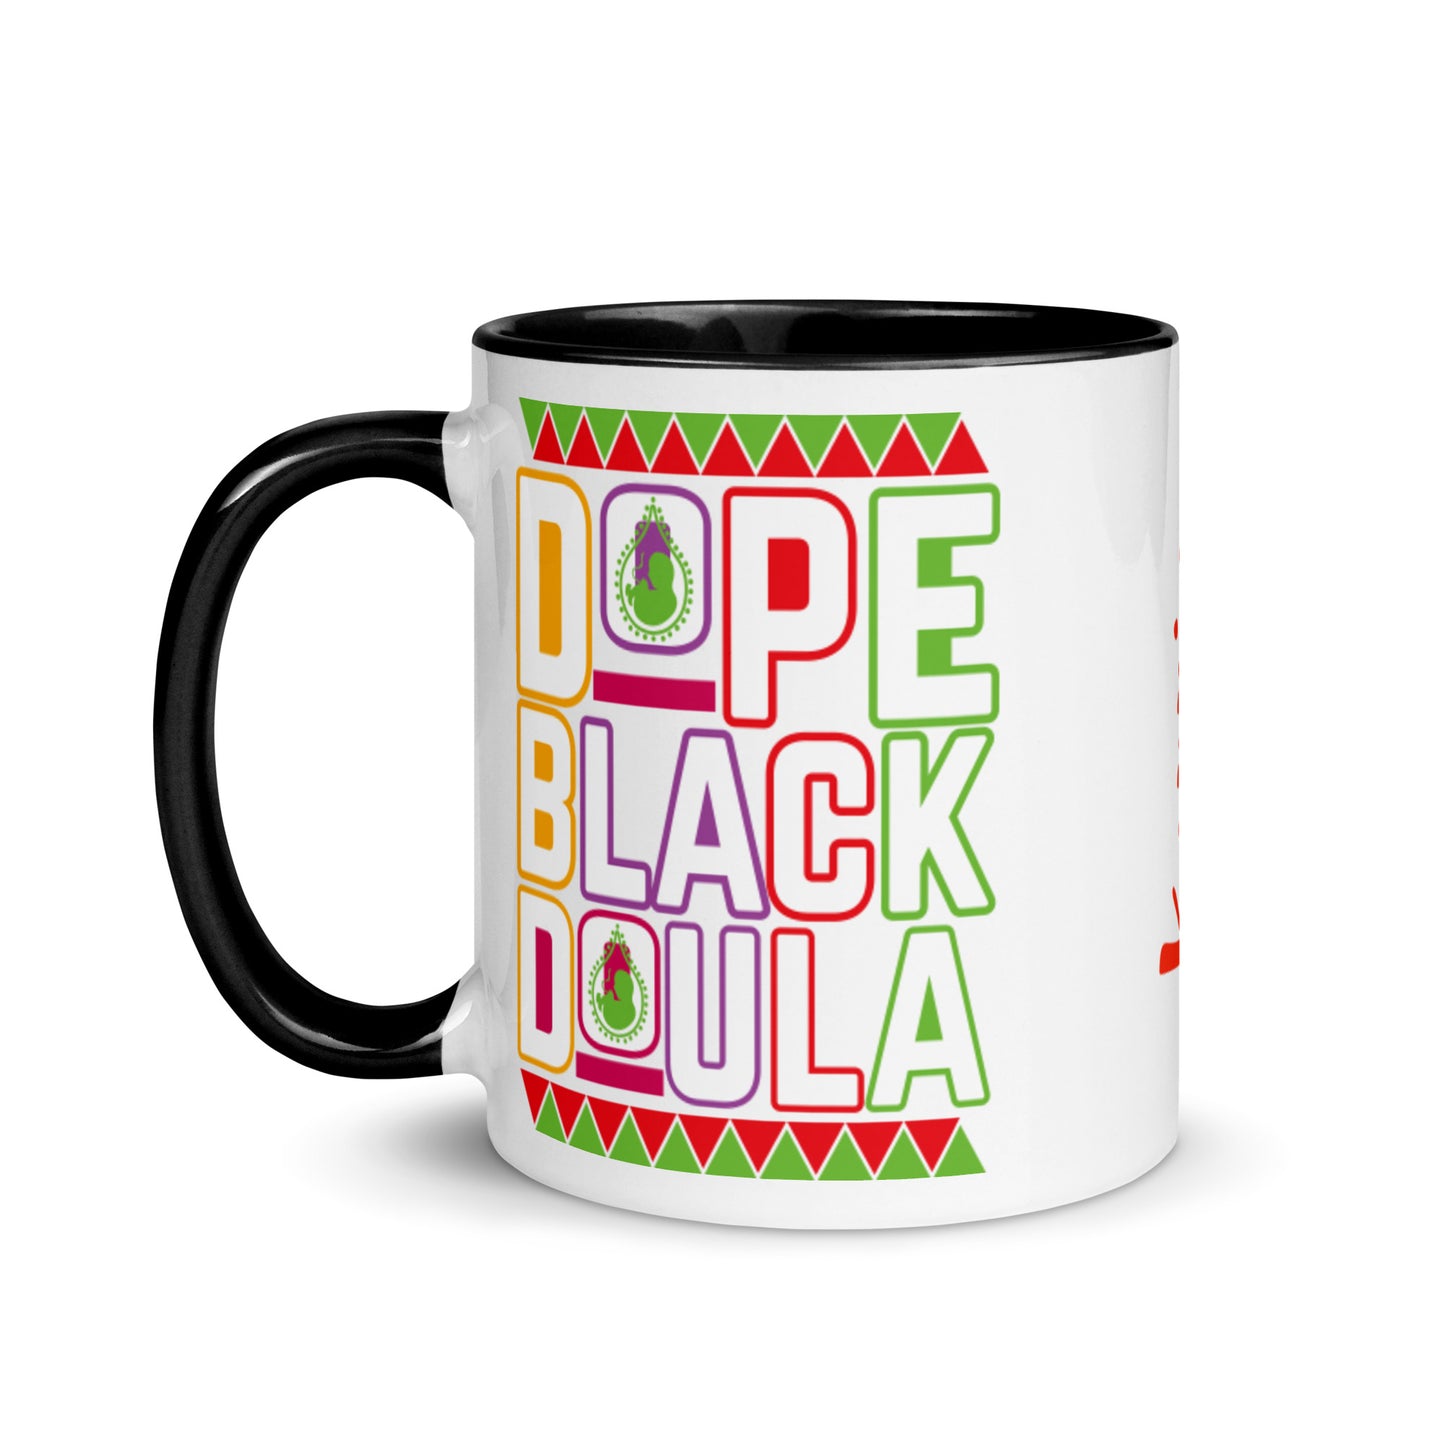 Dope Black Doula Mug • Doula Coffee Mug • Birth Doula Mug